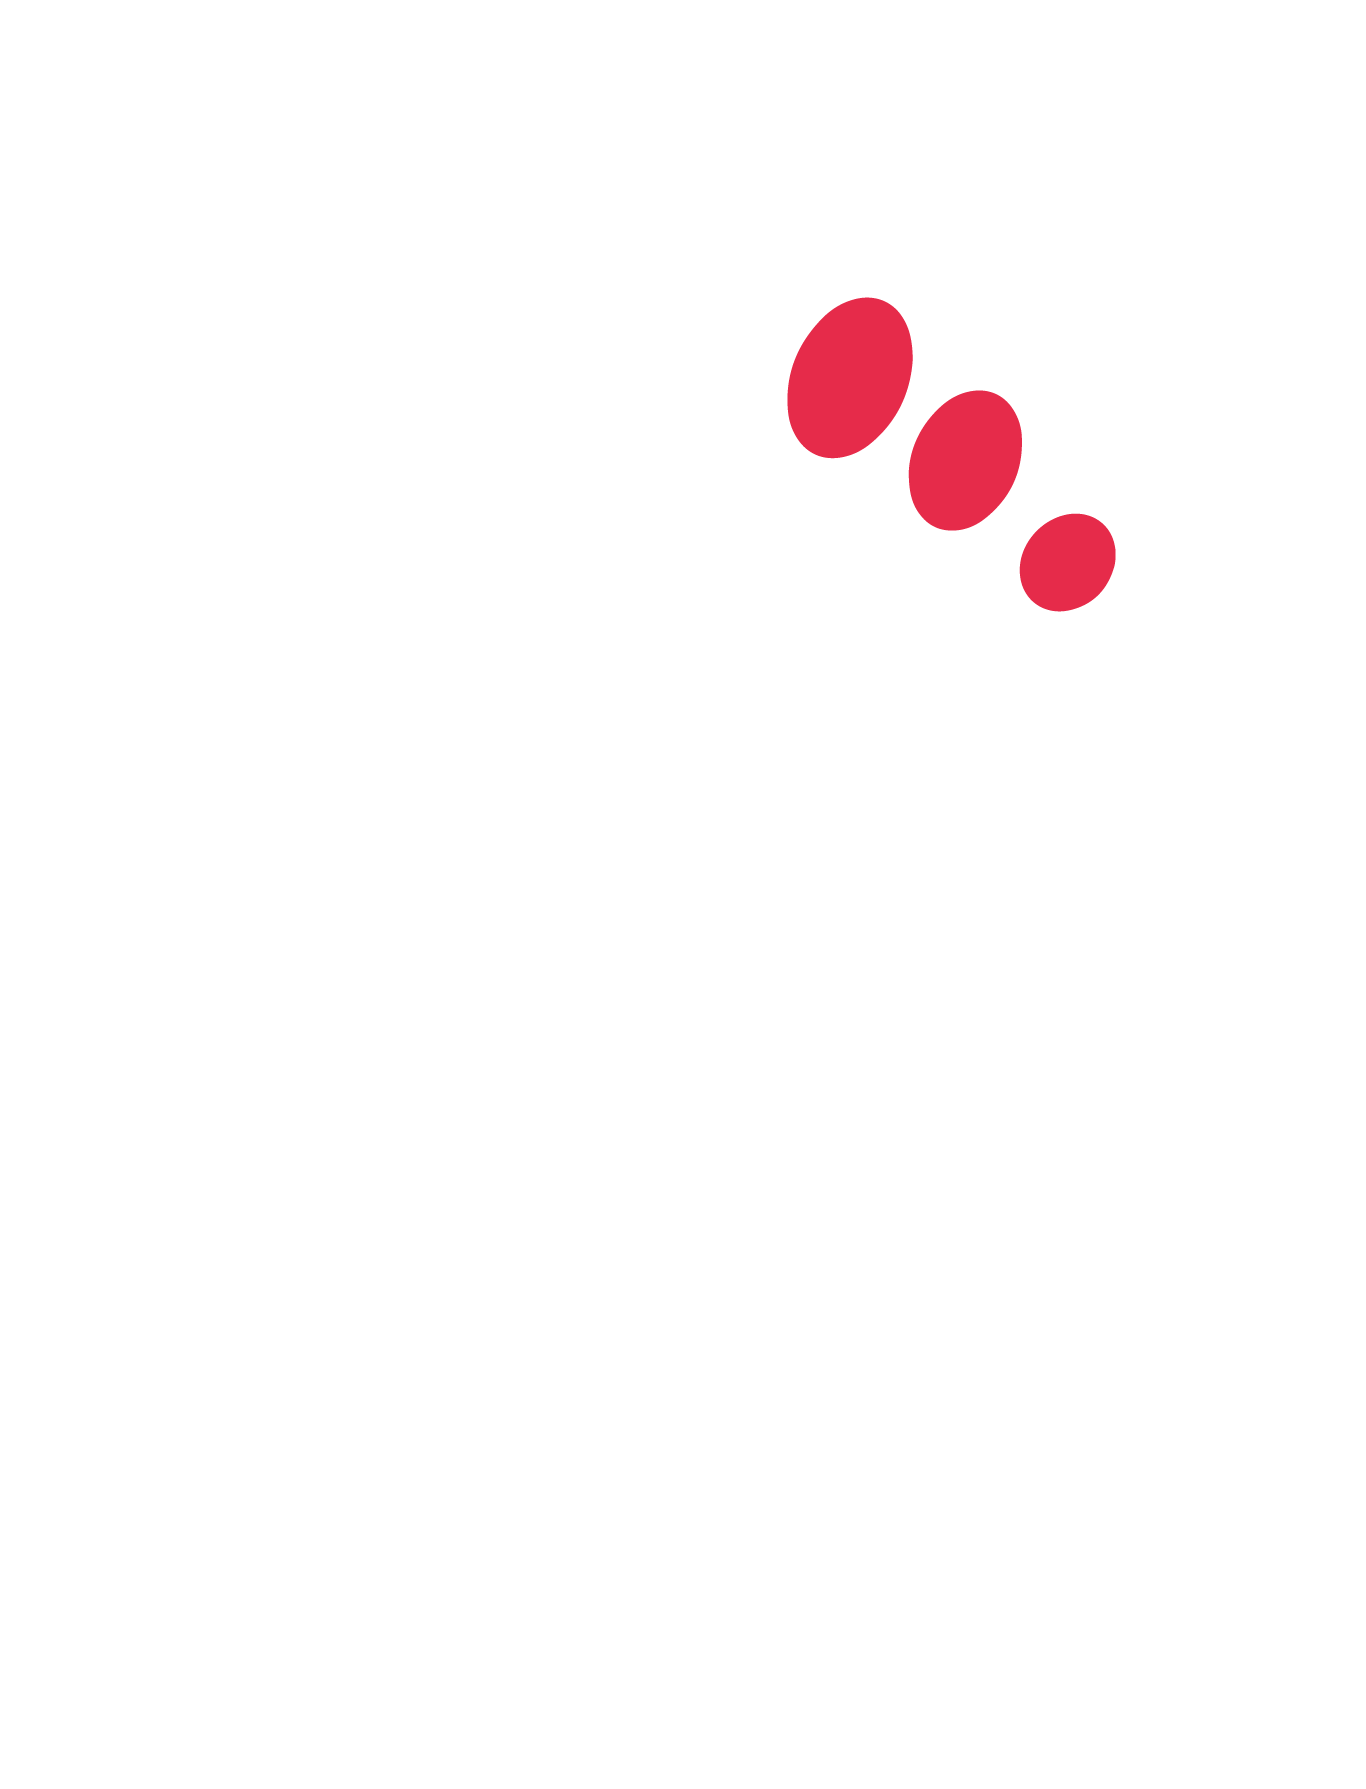 100 pies eventos